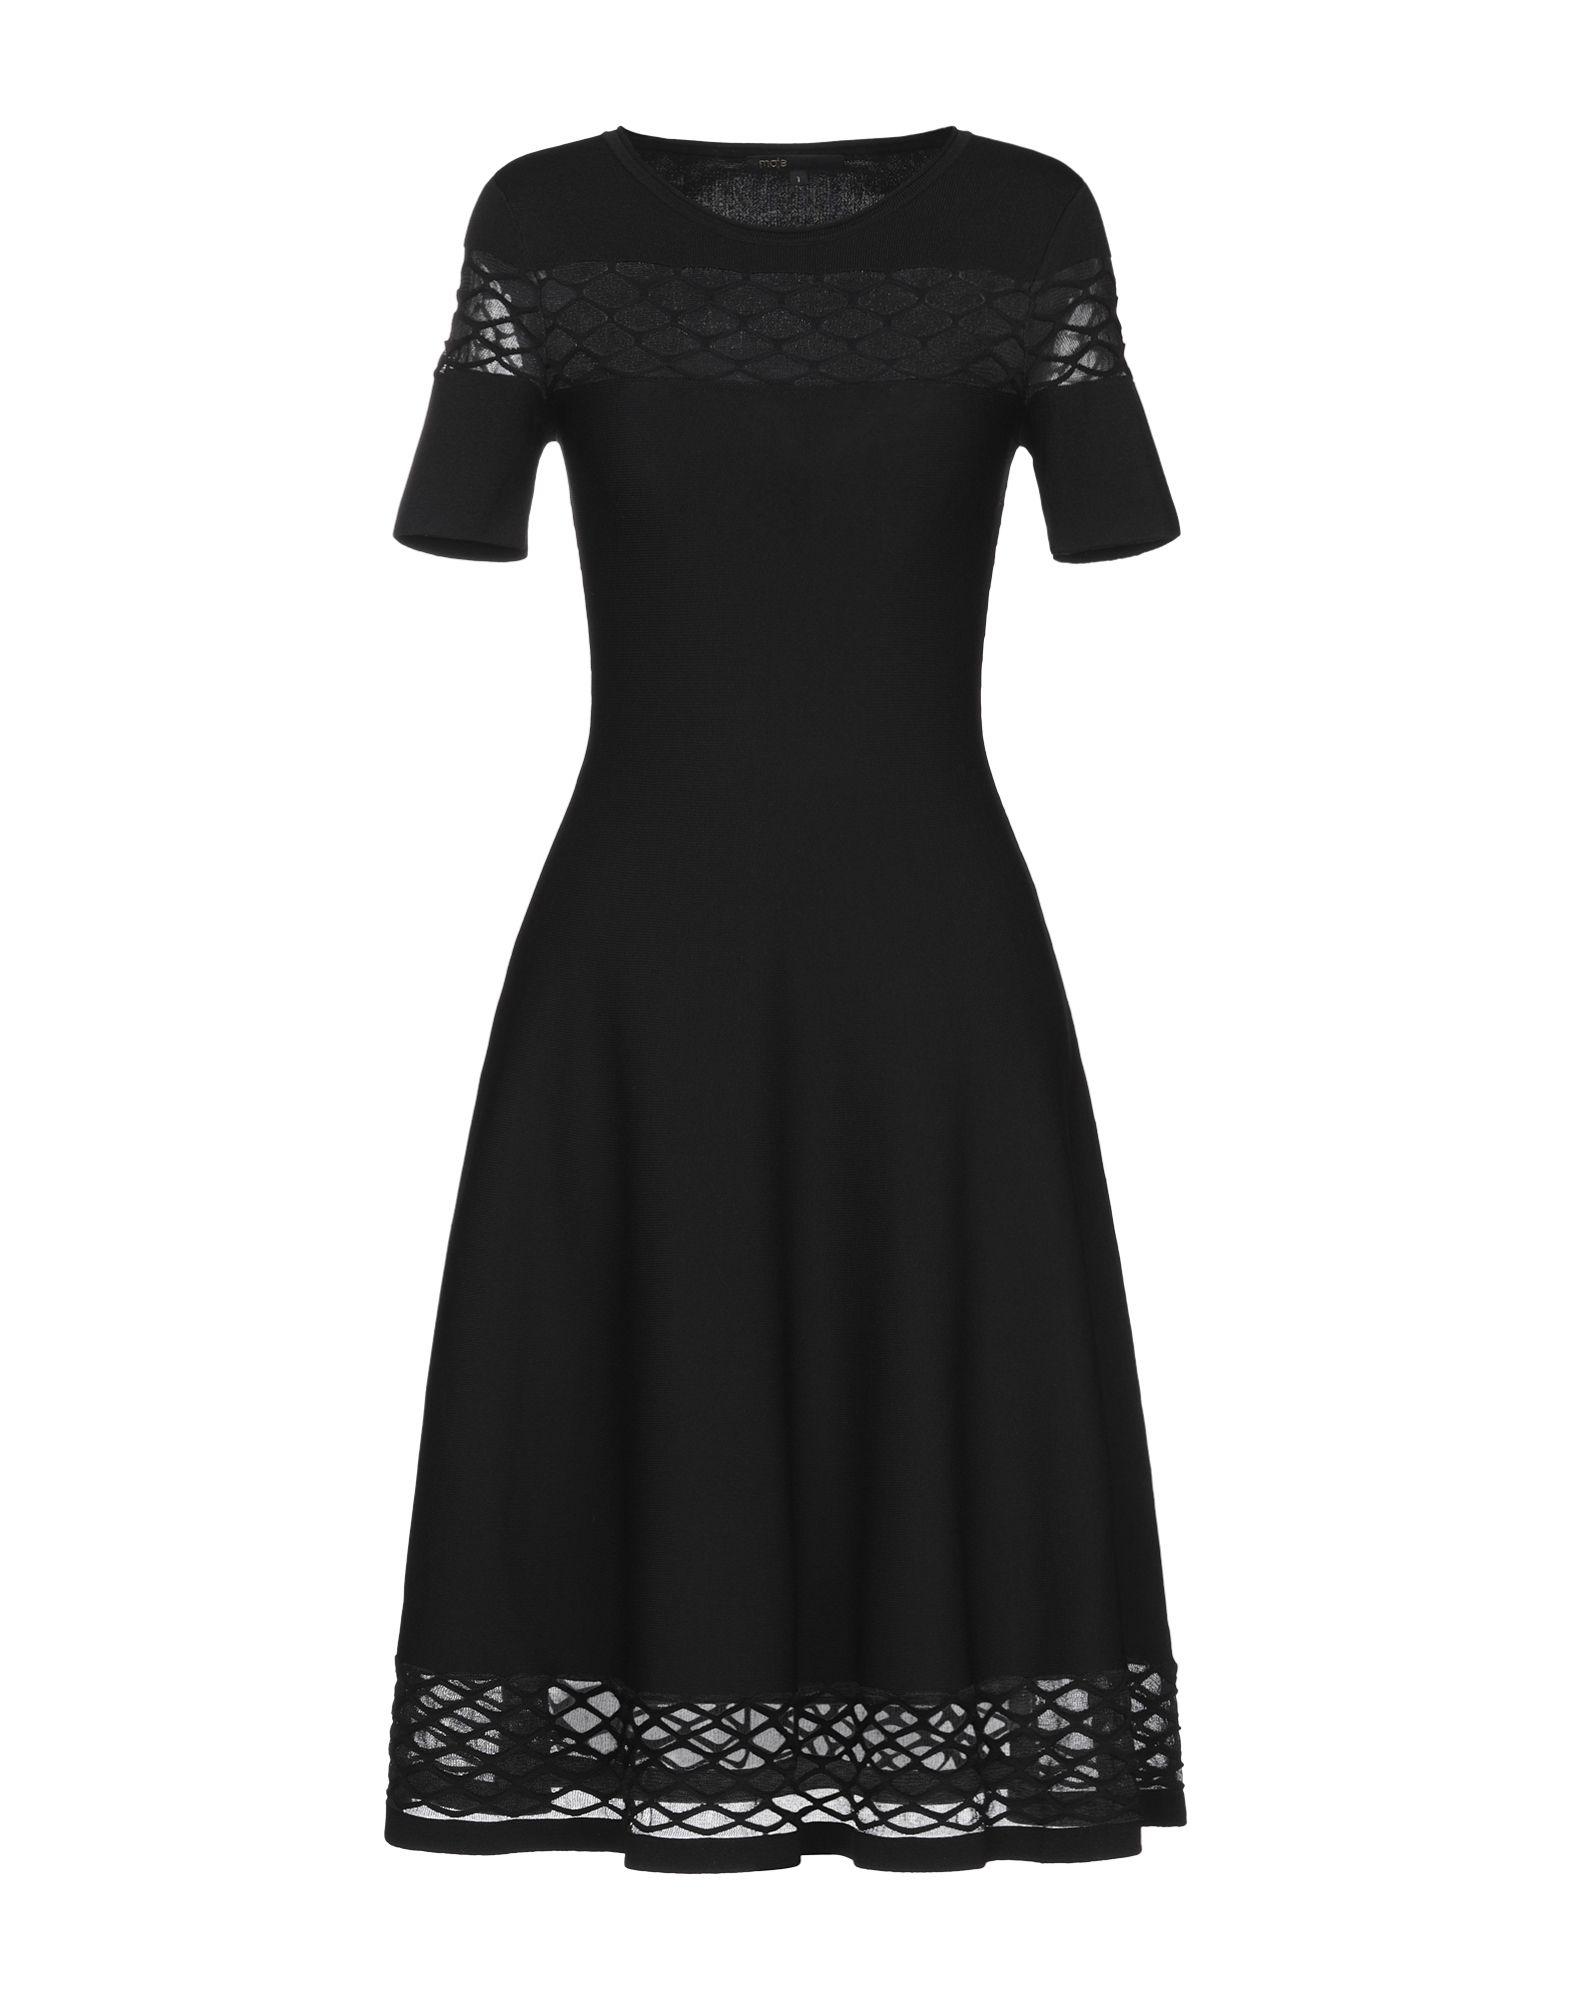 Maje Synthetic Knee-length Dress in Black - Lyst